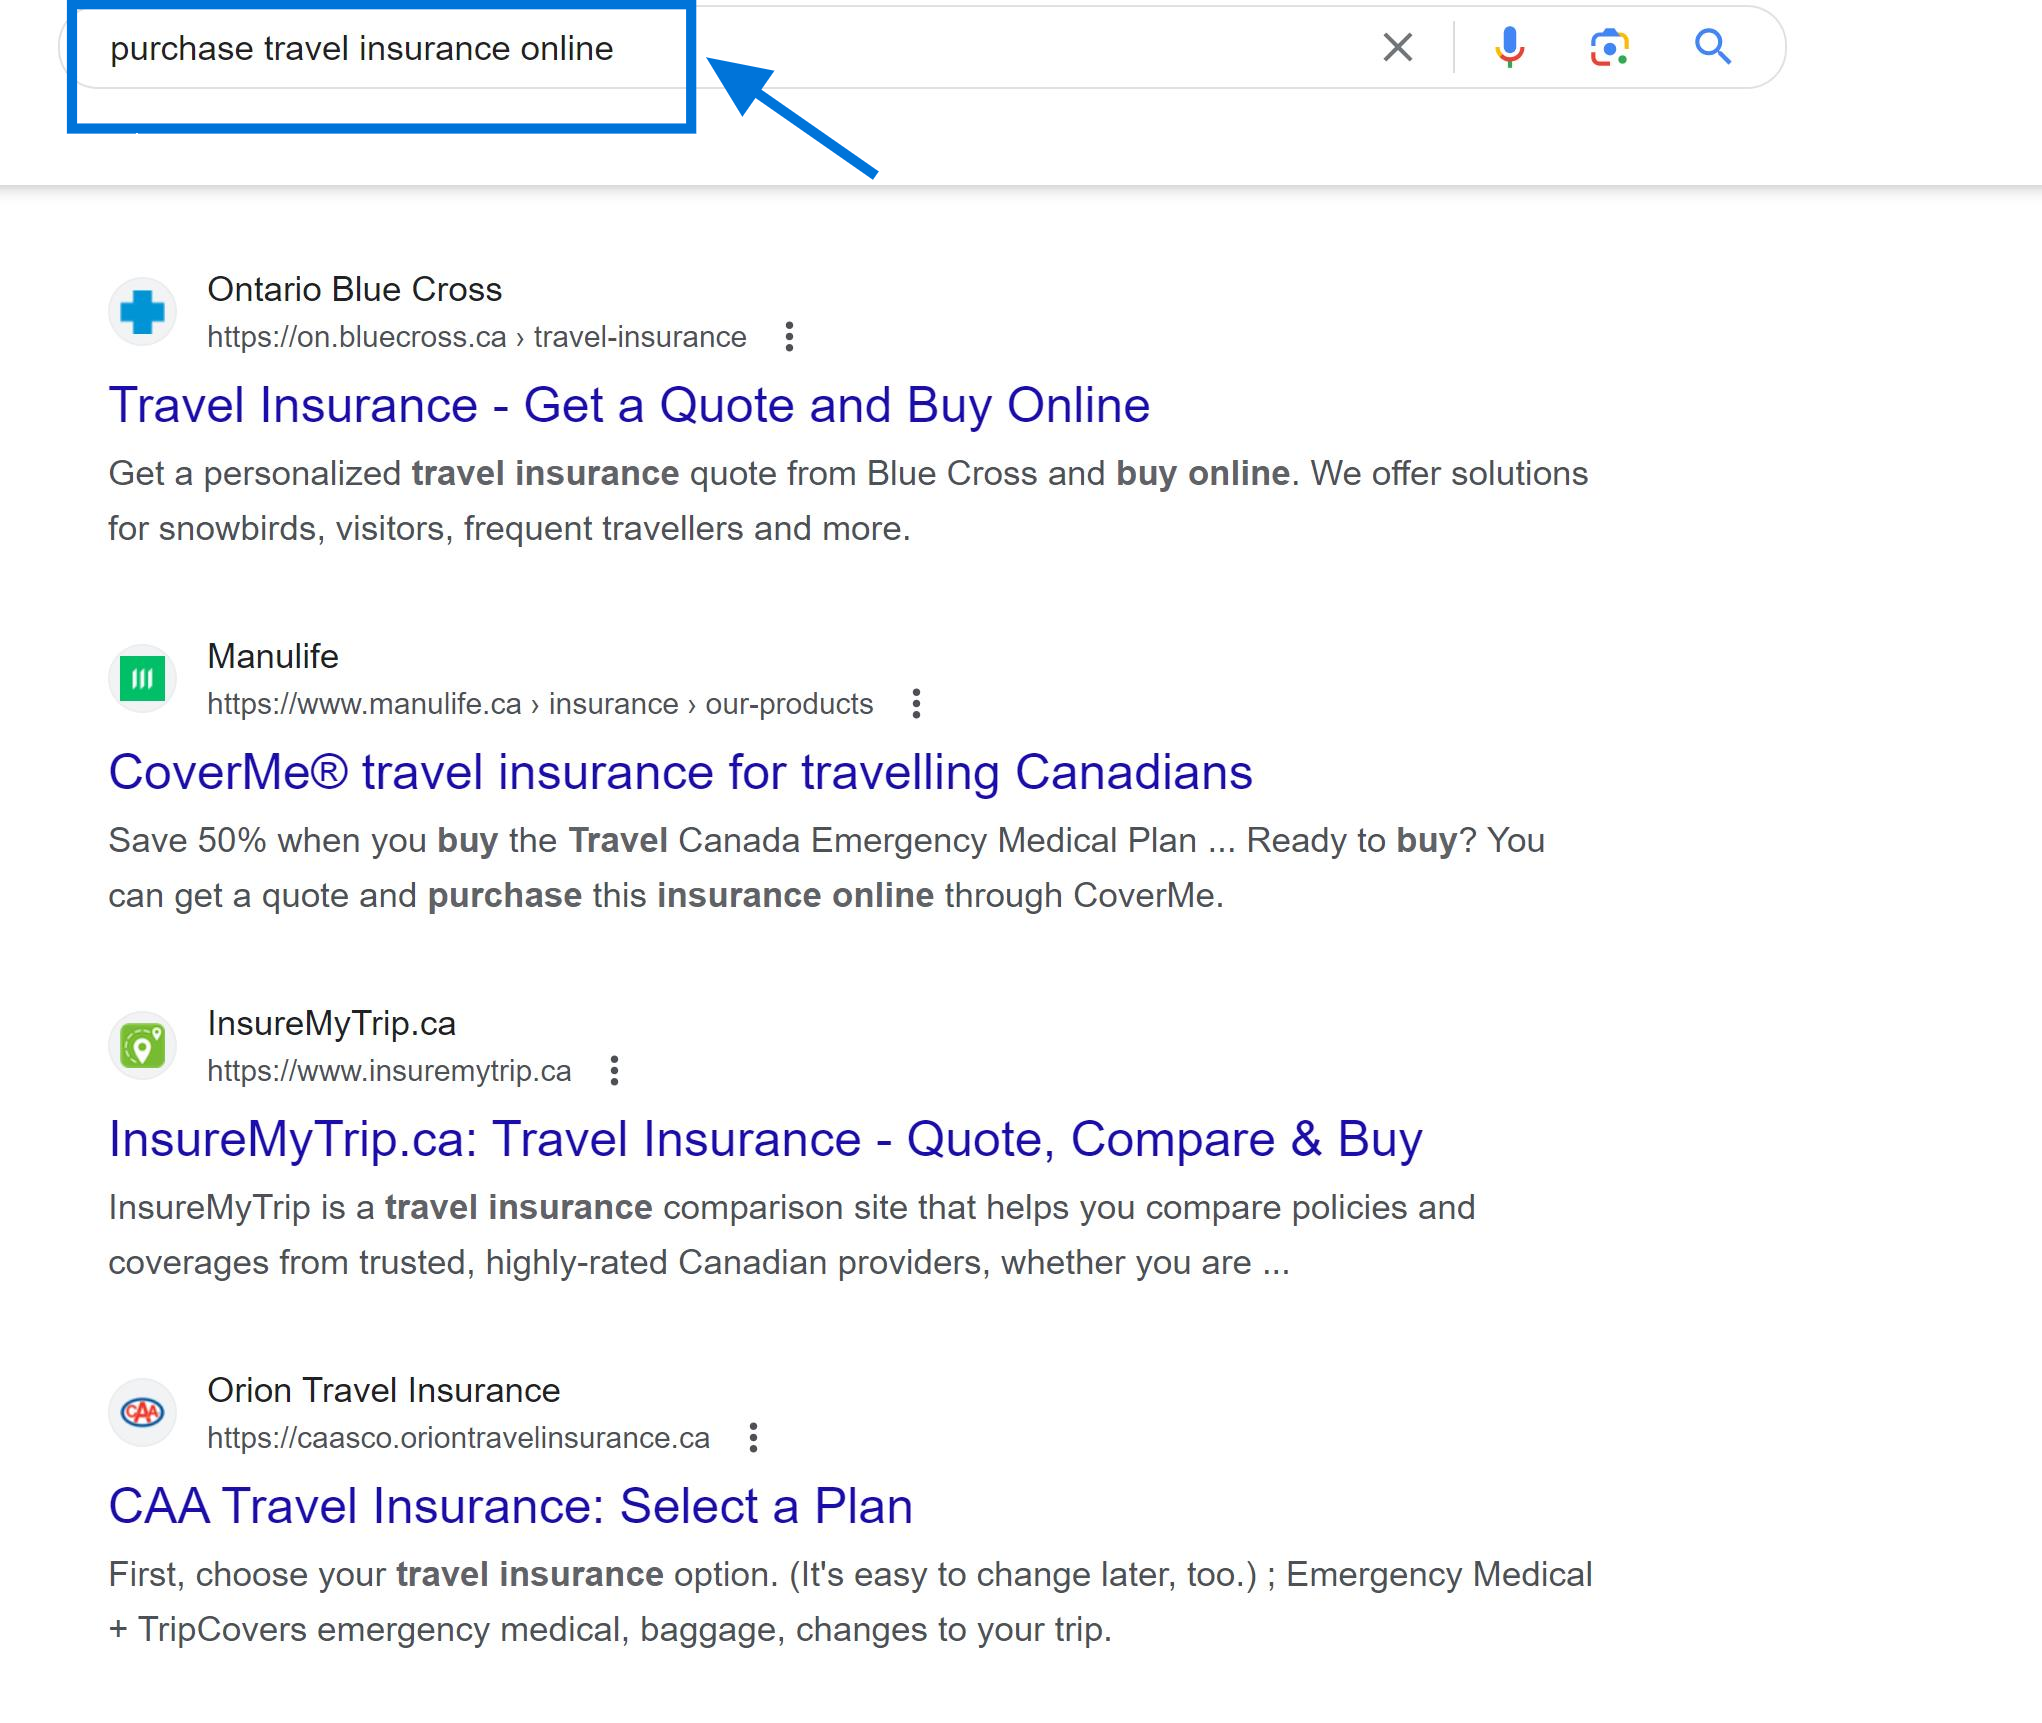 Transactional Keywords Example "purchase travel insurance online"